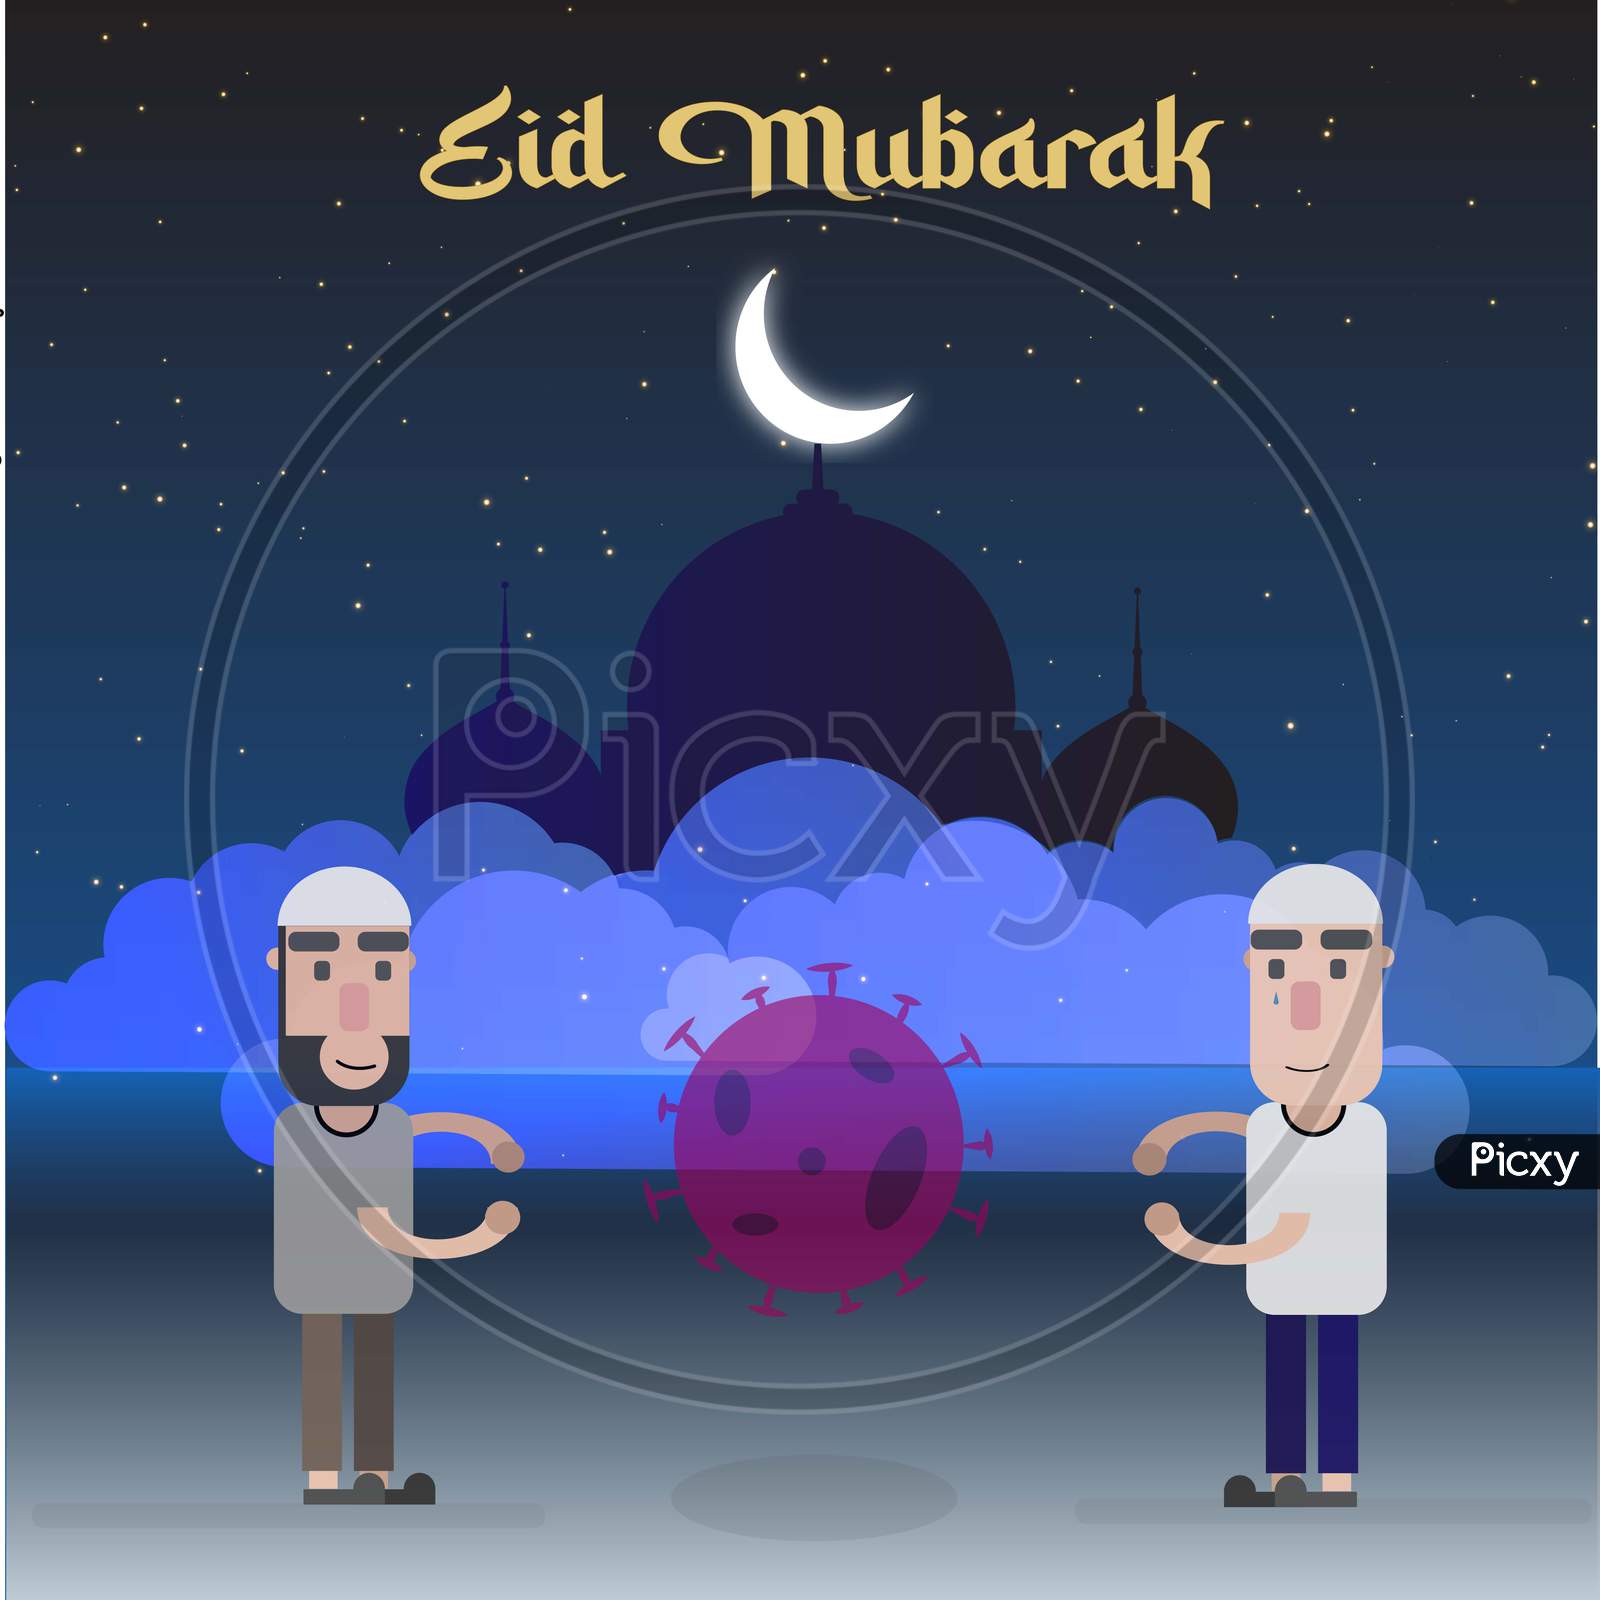 Eid Mubarak greeting illustration during coronavirus pandemic poster, banner, card, background, illustration vector